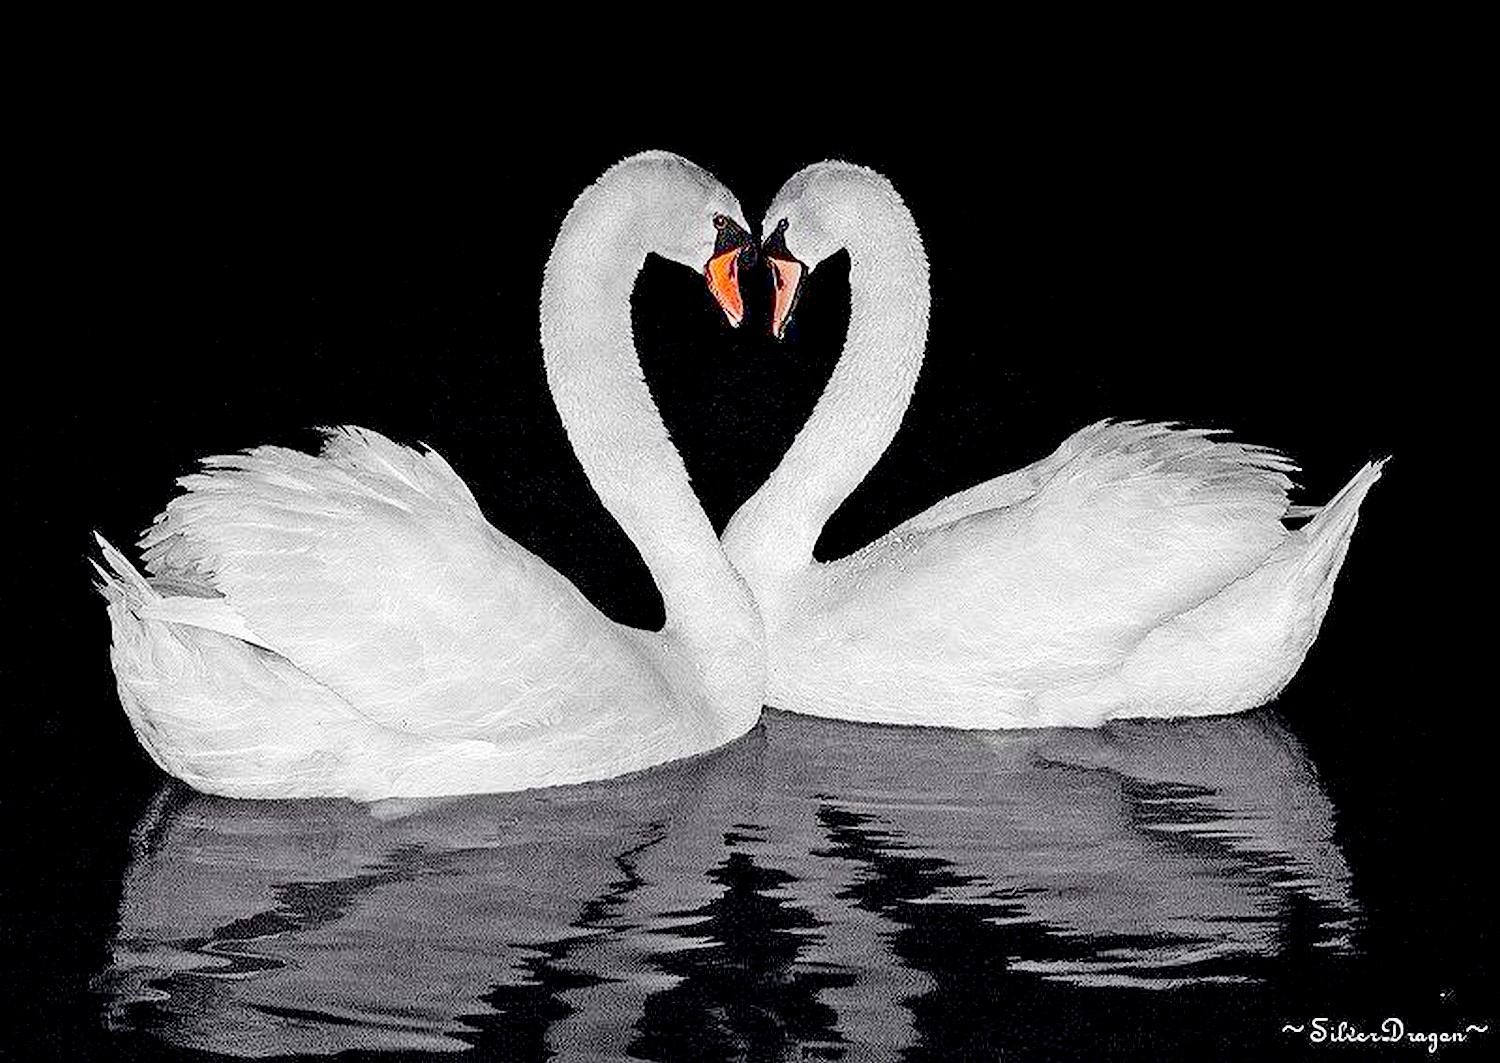 Образы верности. Два лебедя. Пара лебедей. Лебеди символ верности. Лебеди (птицы).